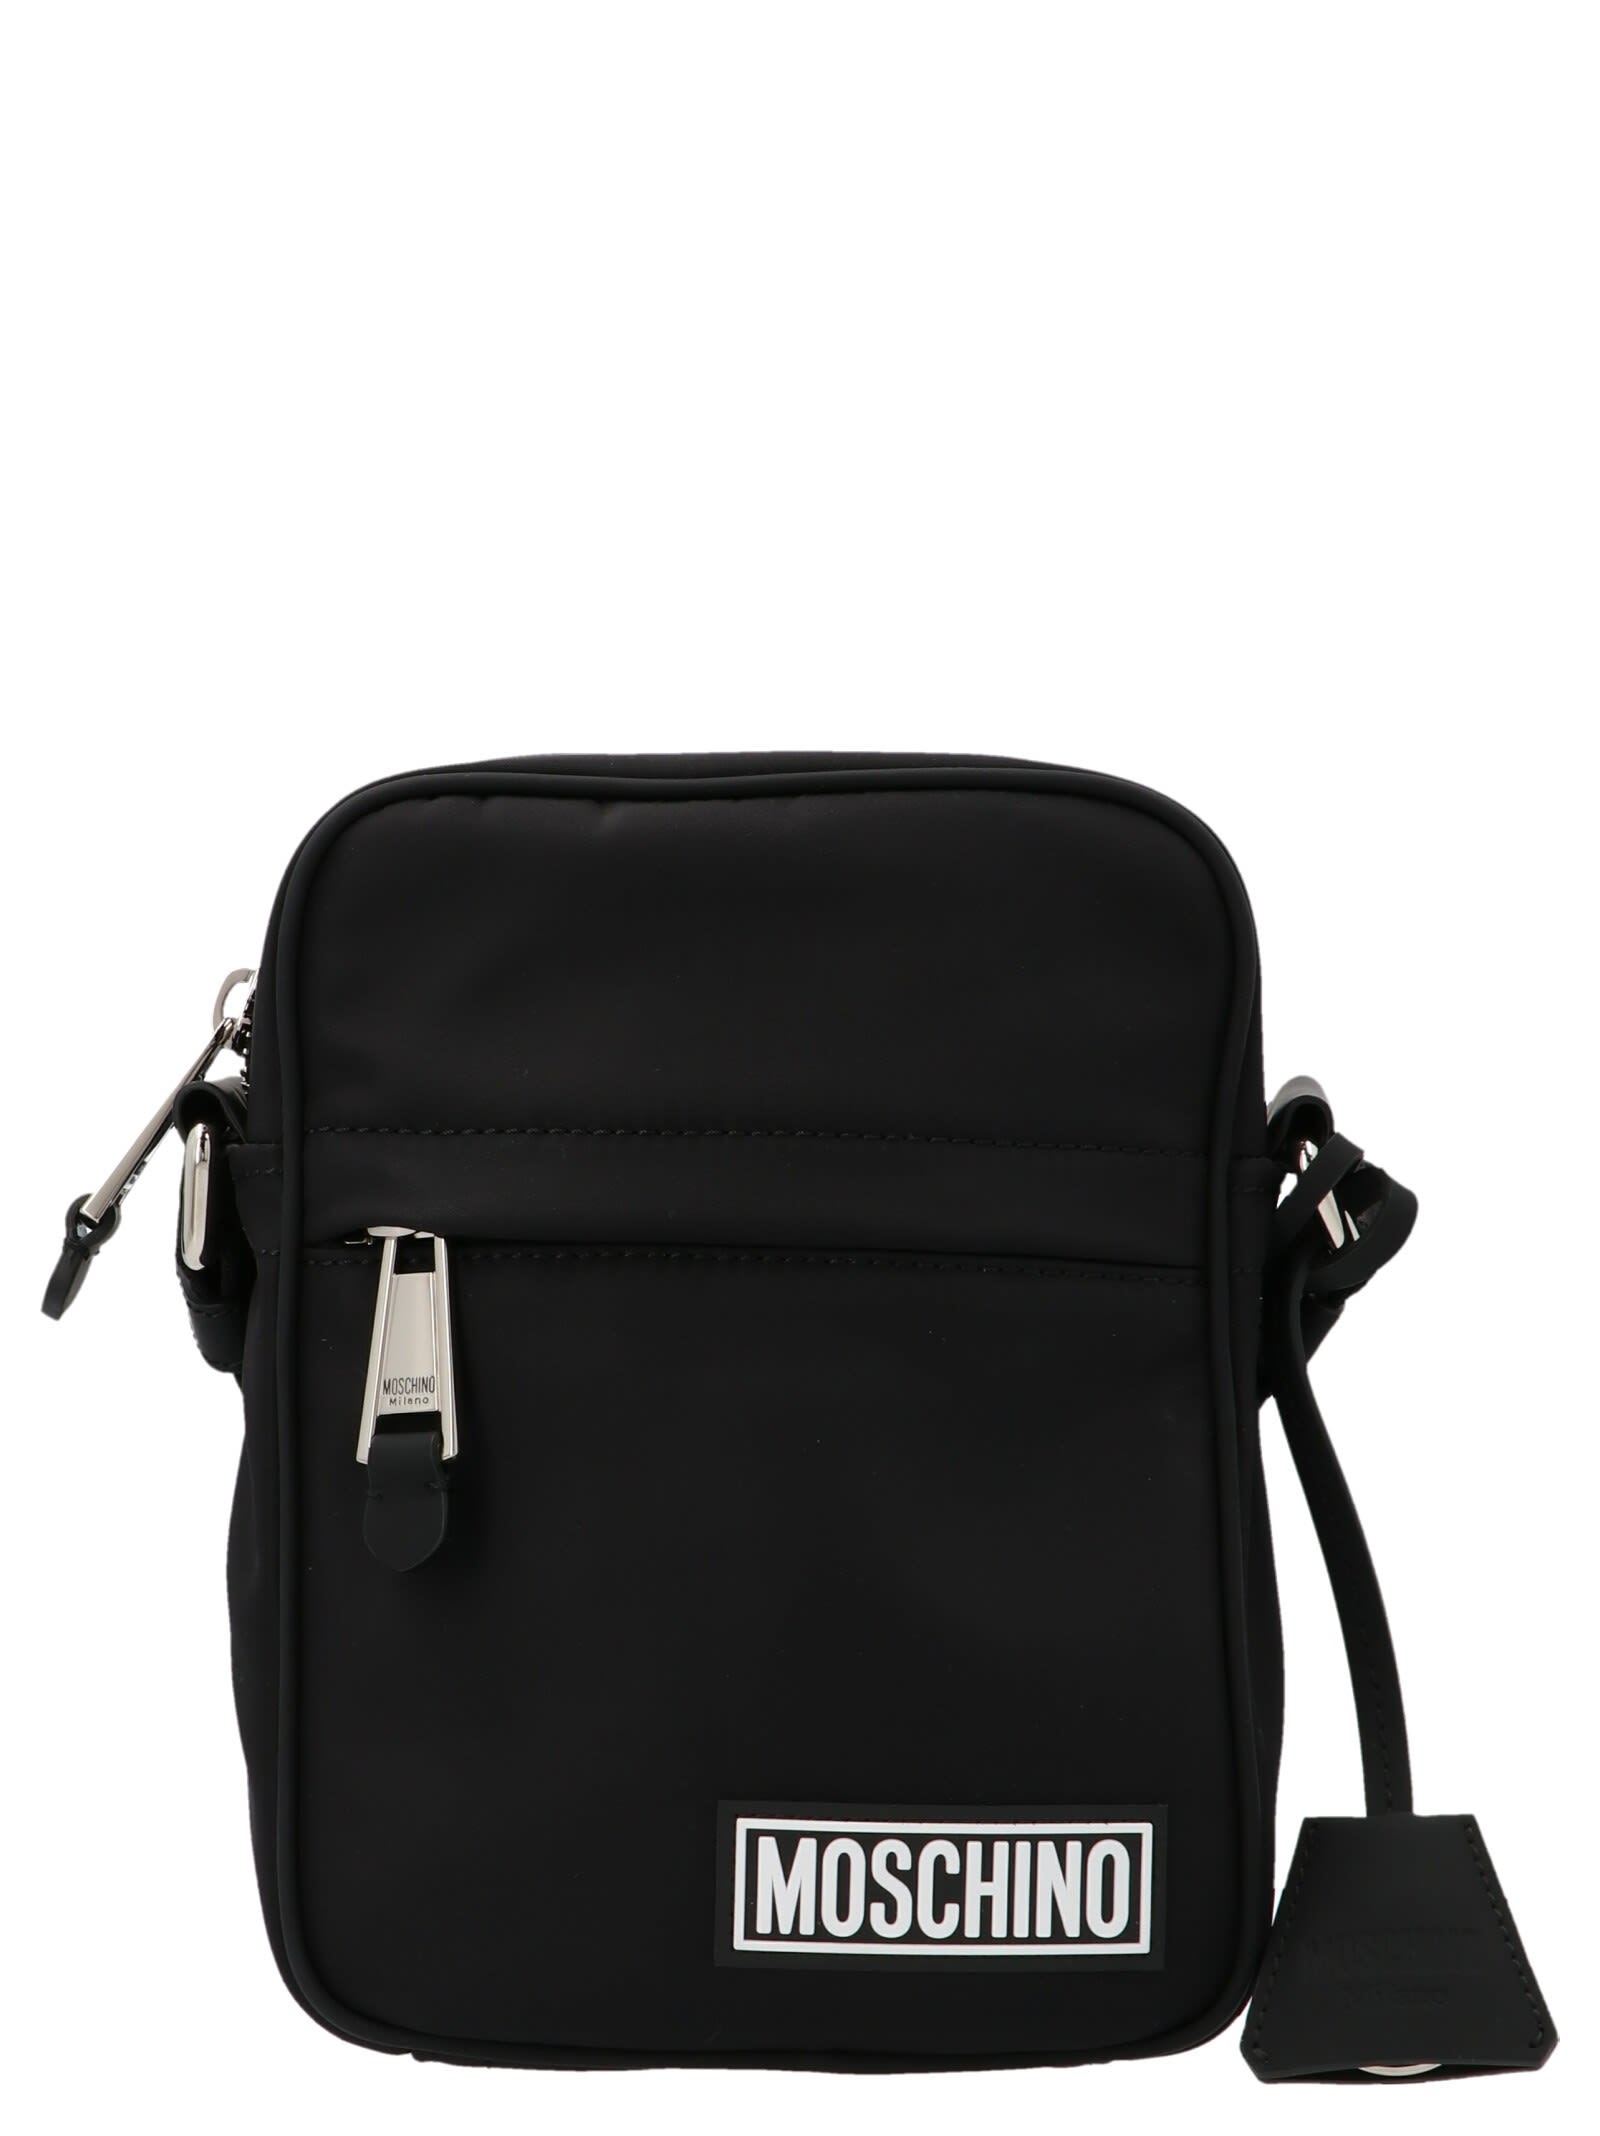 Moschino label Nylon Crossbody Bag